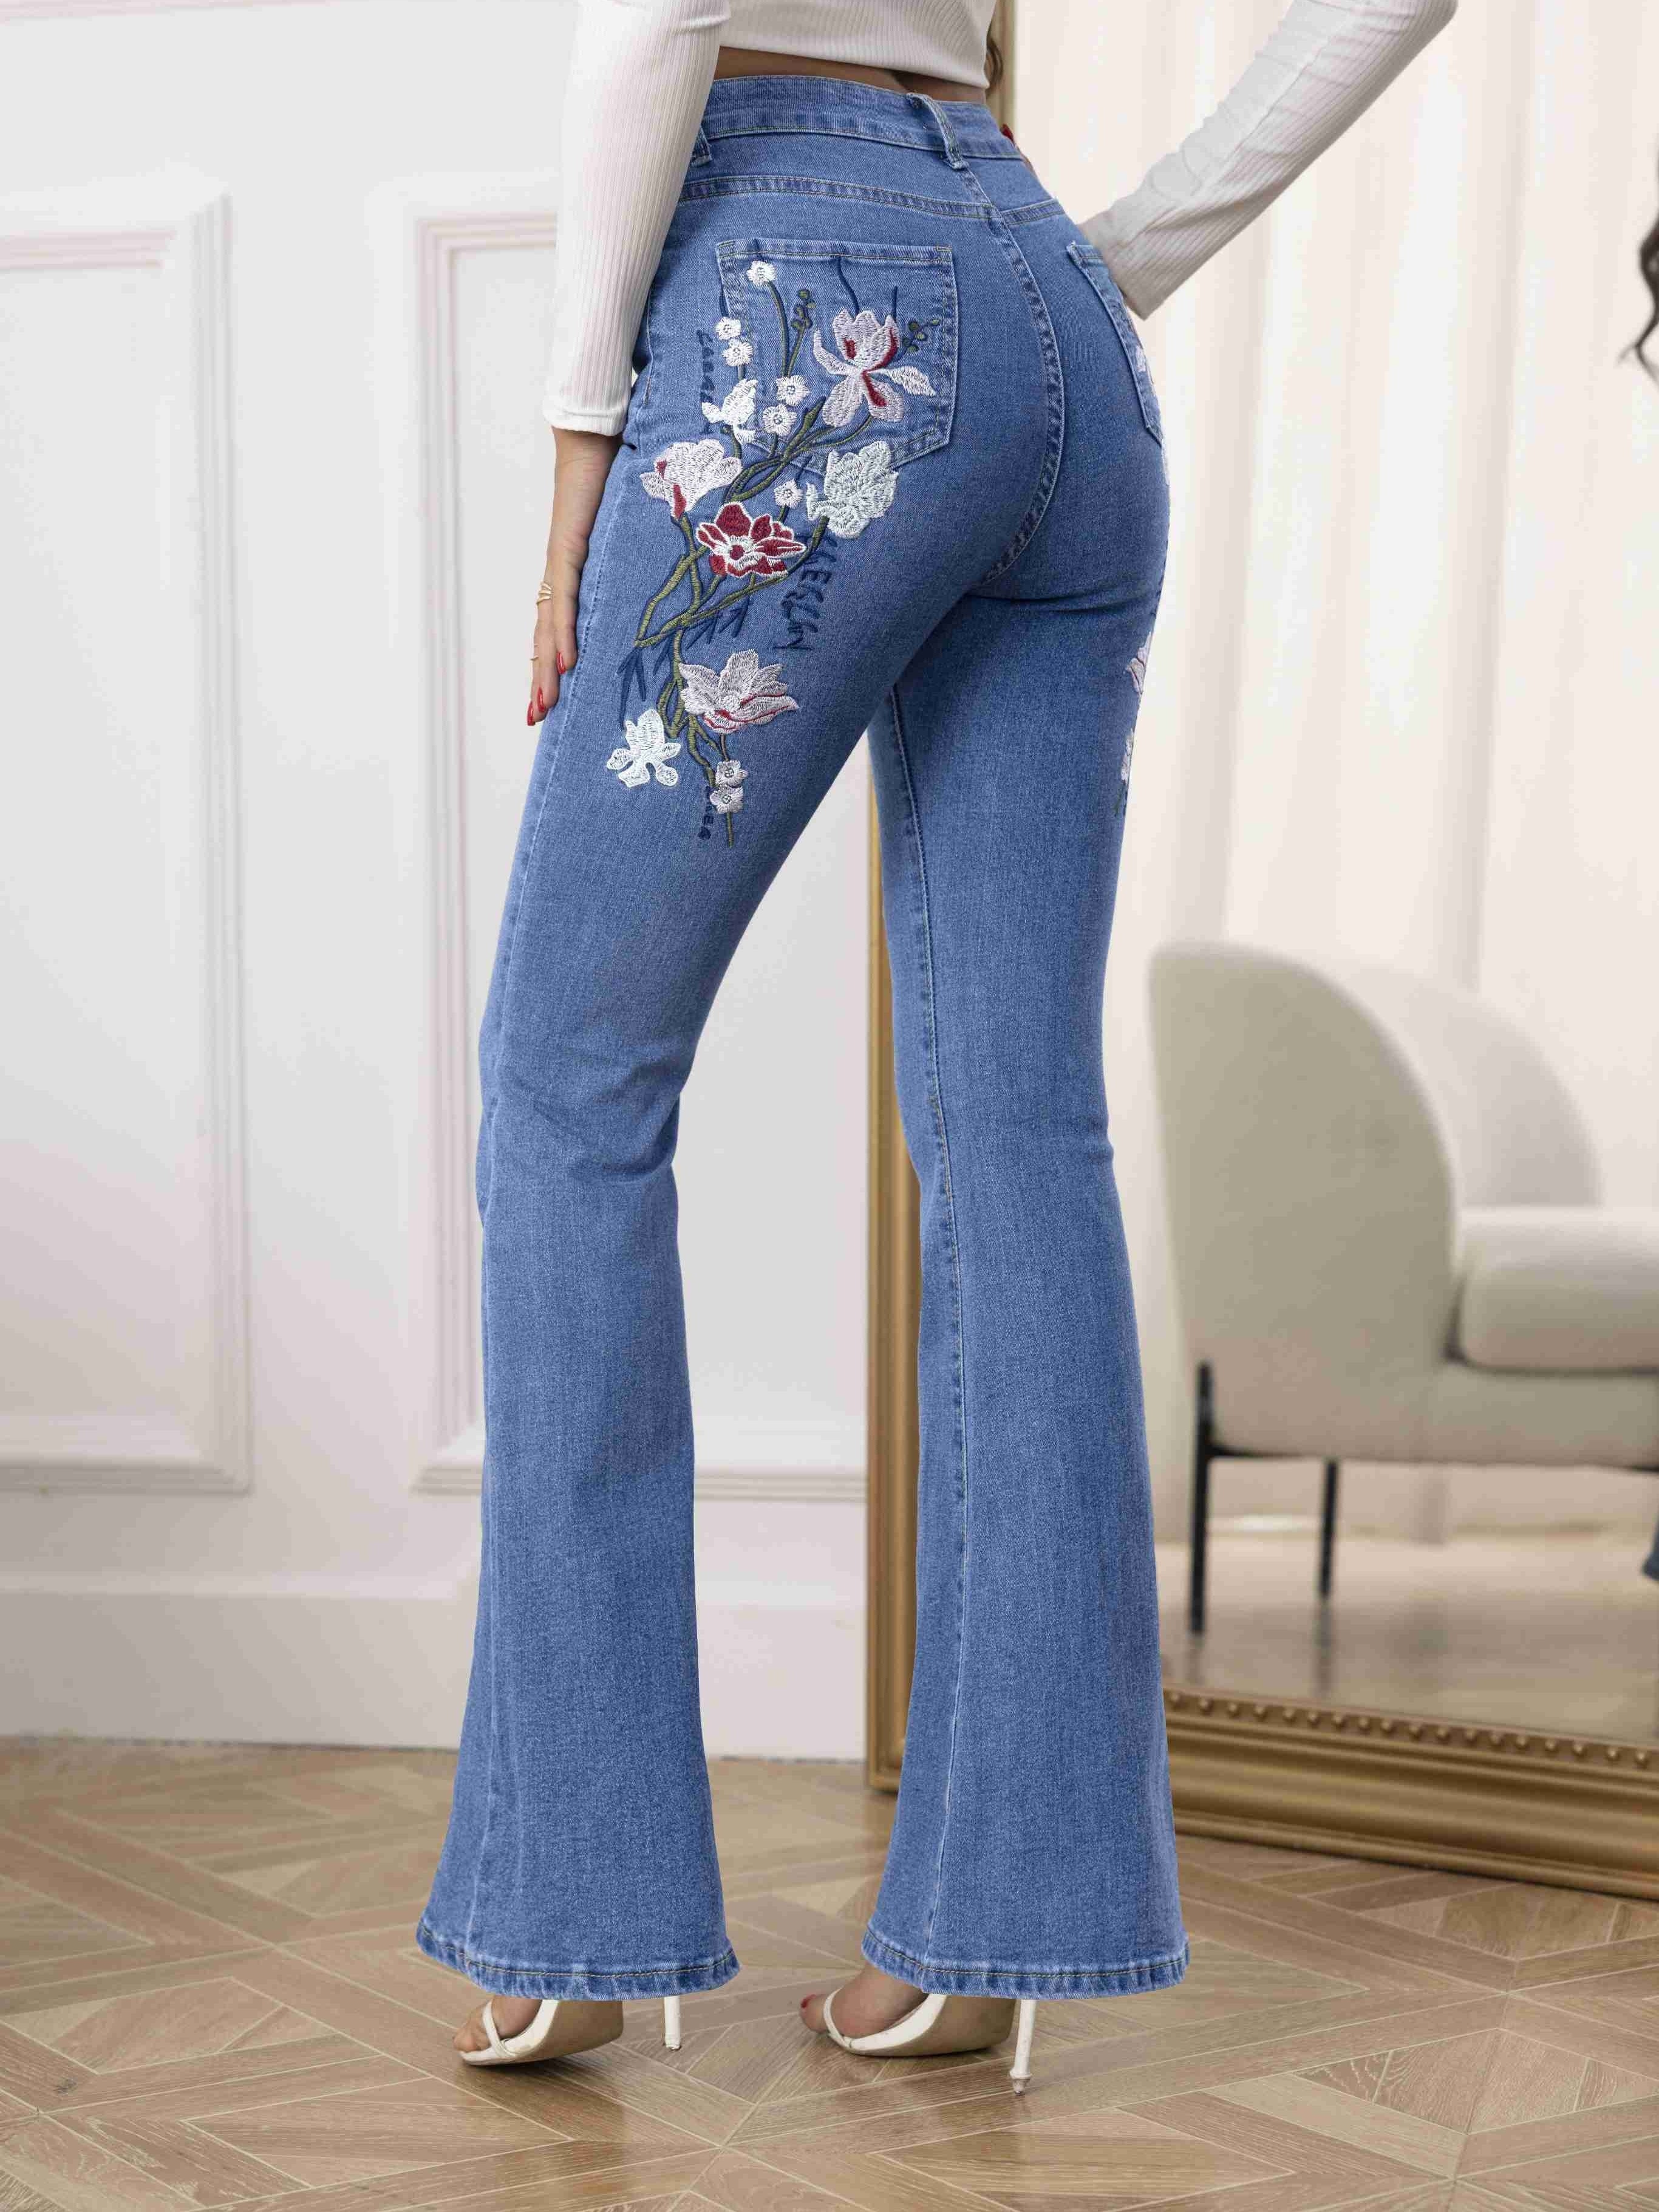 Floral Embroidery Stretchy Flare Leg Jeans, Medium Washed Blue Elegant Bell  Bottoms Denim Pants, Women's Denim Jeans & Clothing